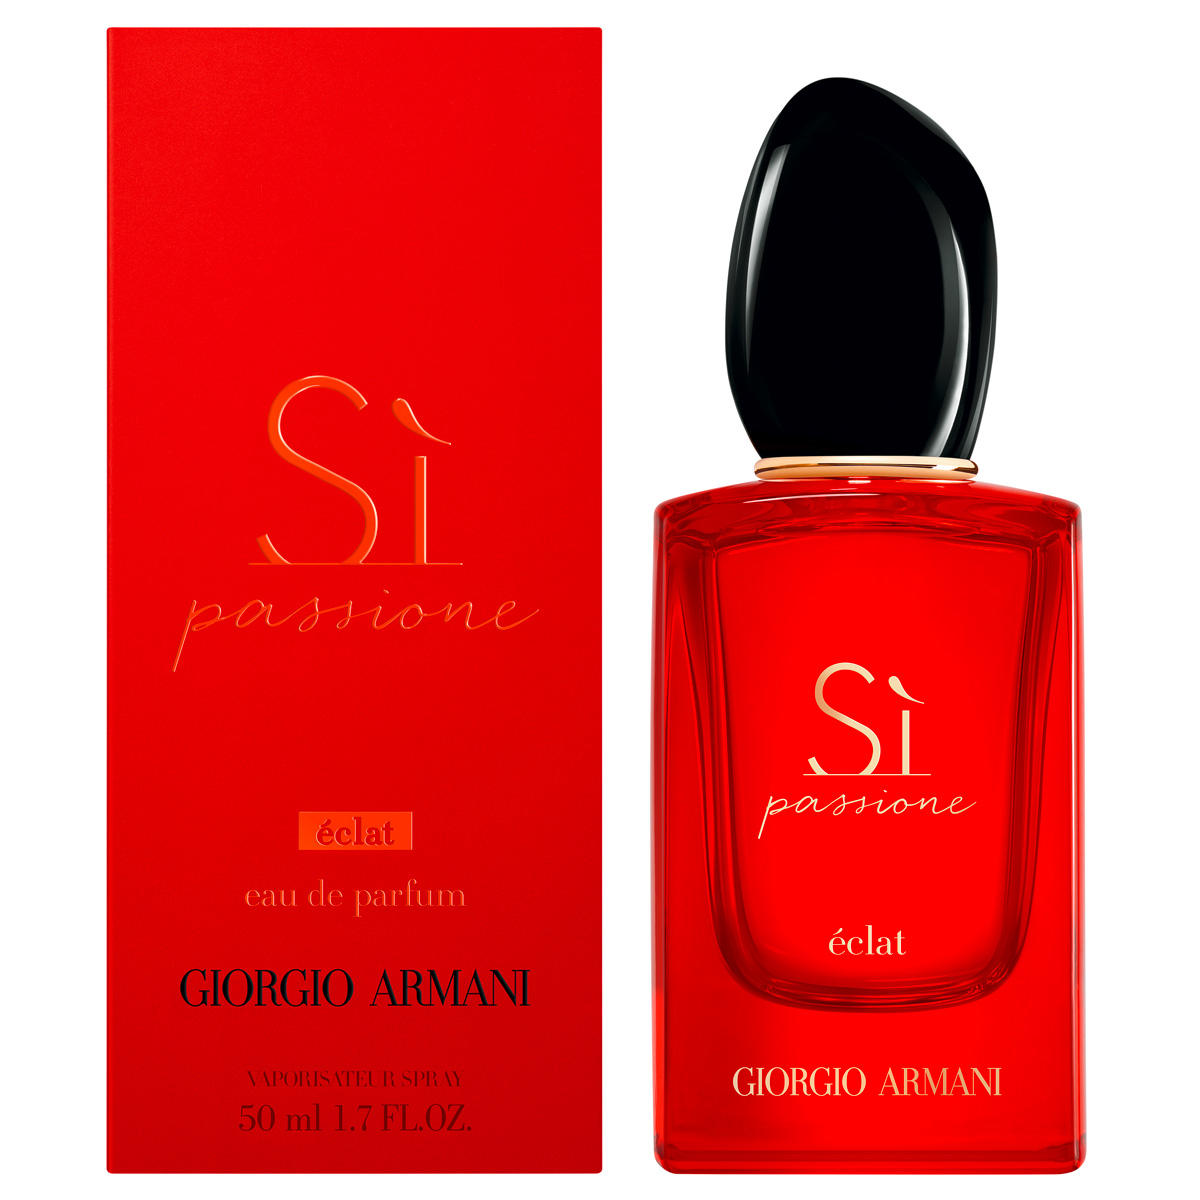 Giorgio Armani Sì Passione Éclat Eau de Parfum 50 ml - 3